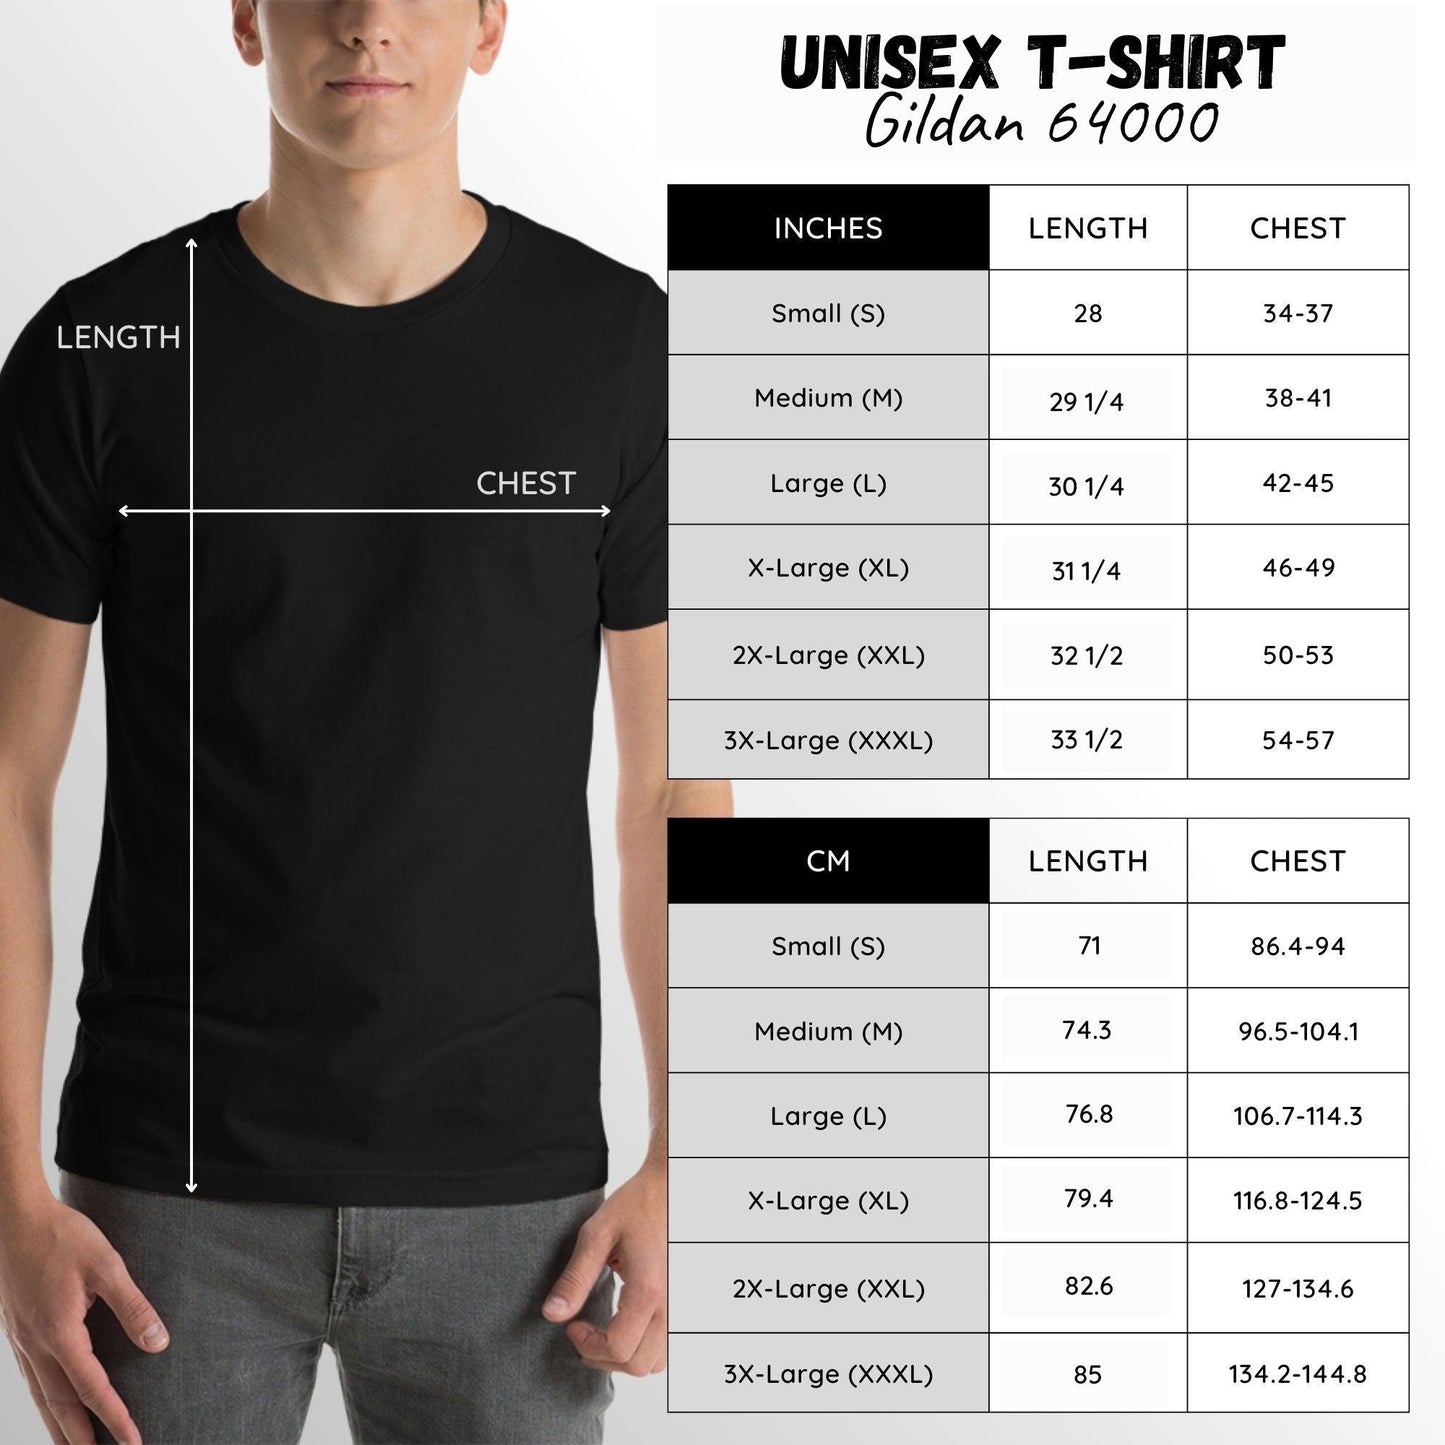 Dread Pirate T-Shirt (Unisex)